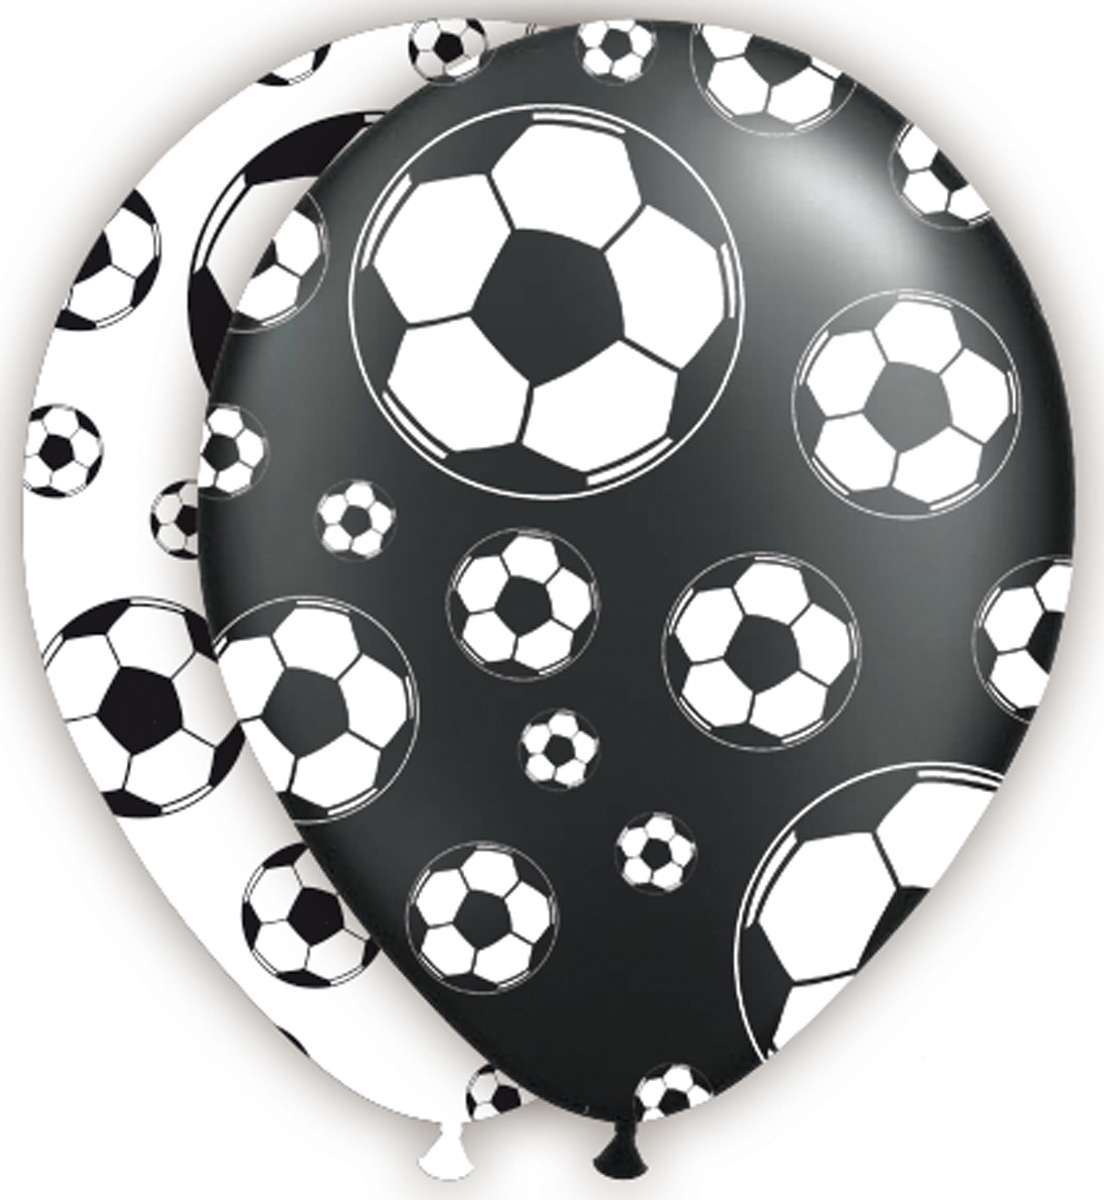 Goedkoop Voetbal Ballonnen Kopen - Feestartikelen & - Feestartikelen Specialist